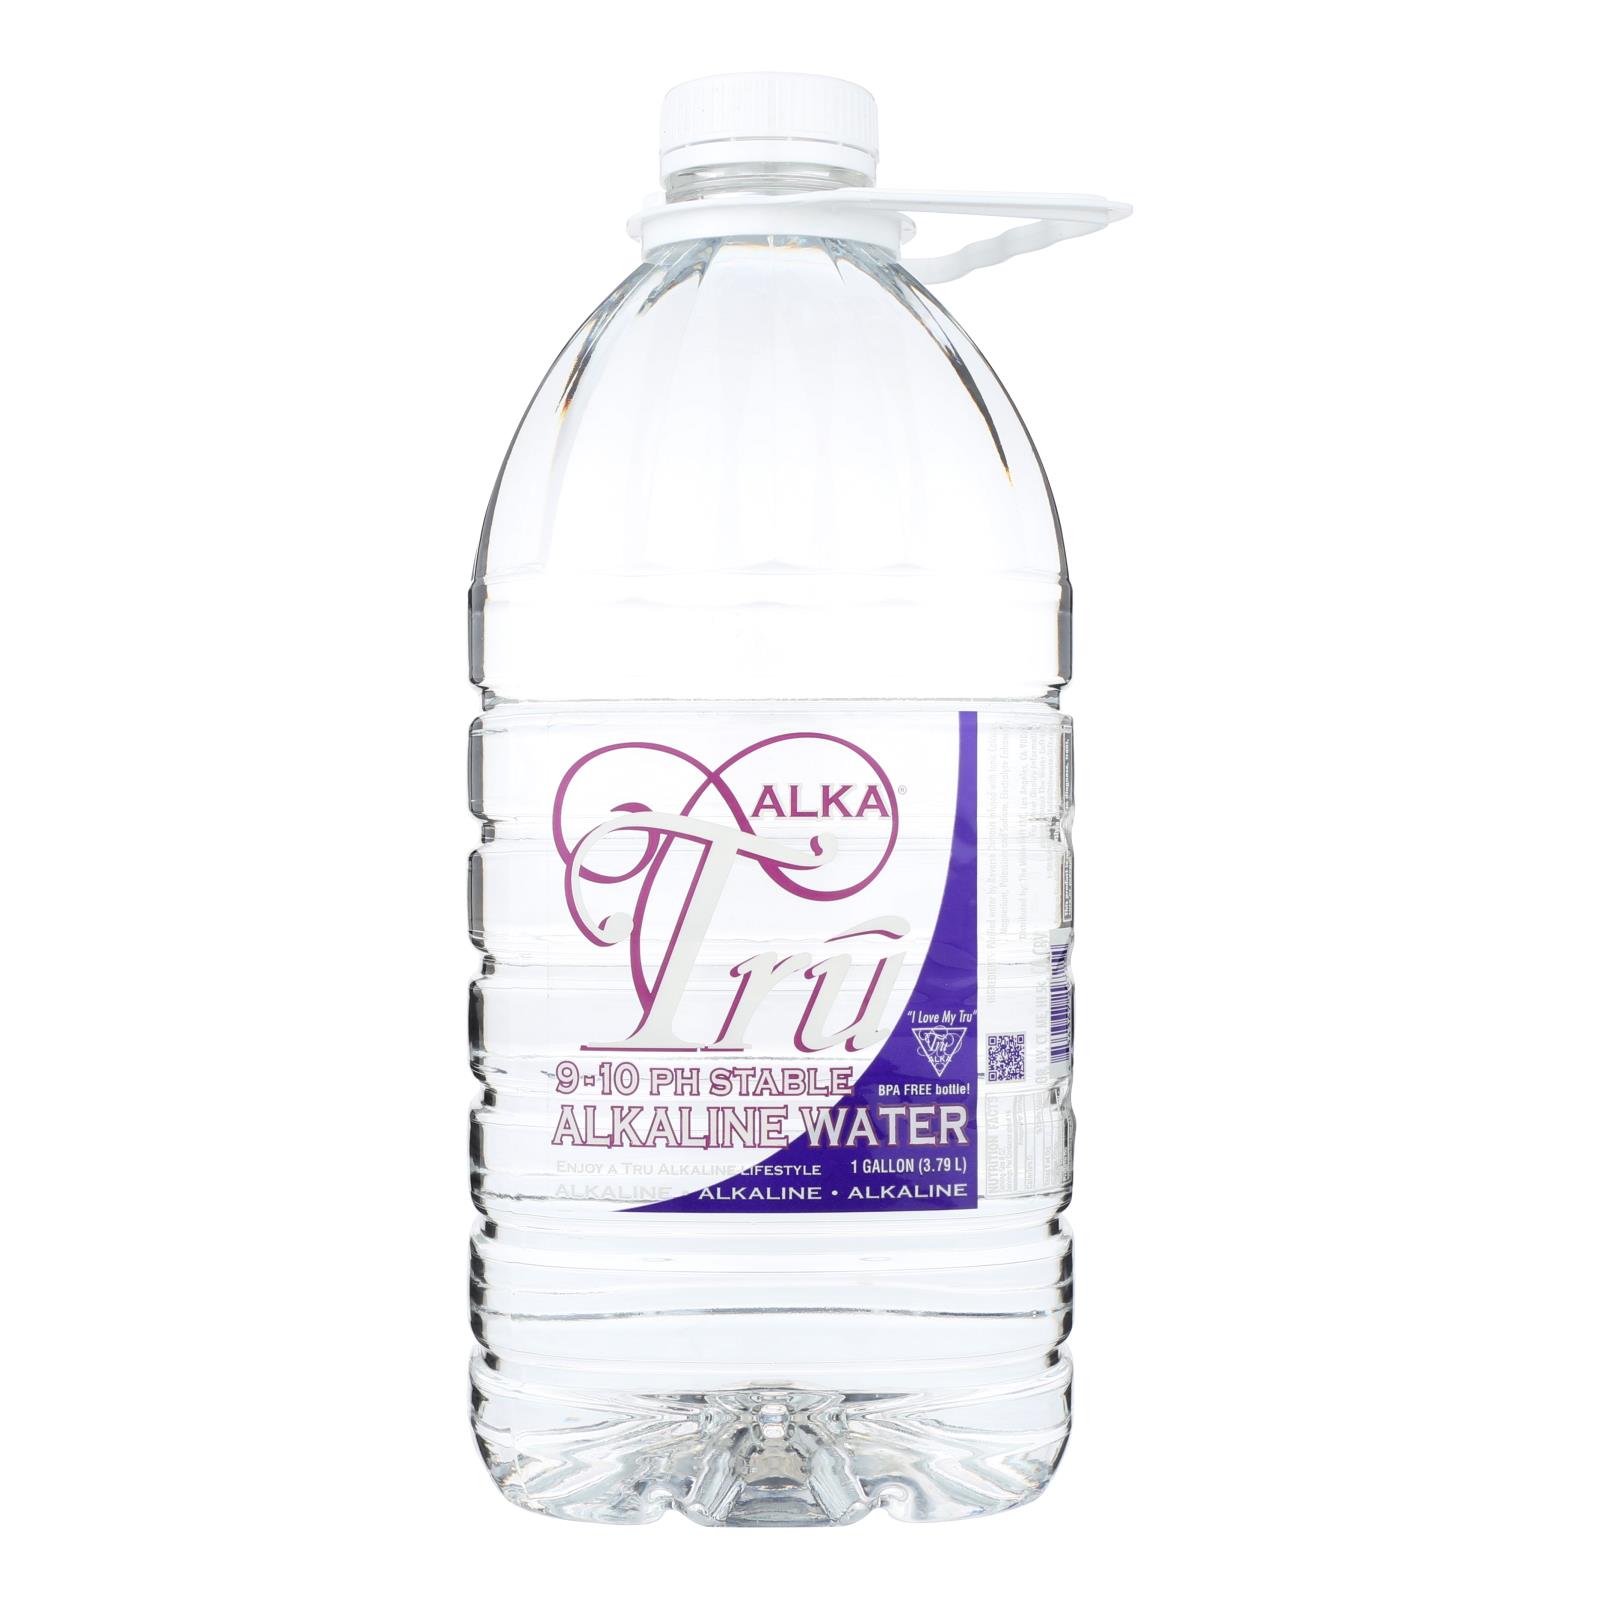 Tru Alka Stable 9-10 Ph Alkaline Water - 6개 묶음상품 - 1 GAL